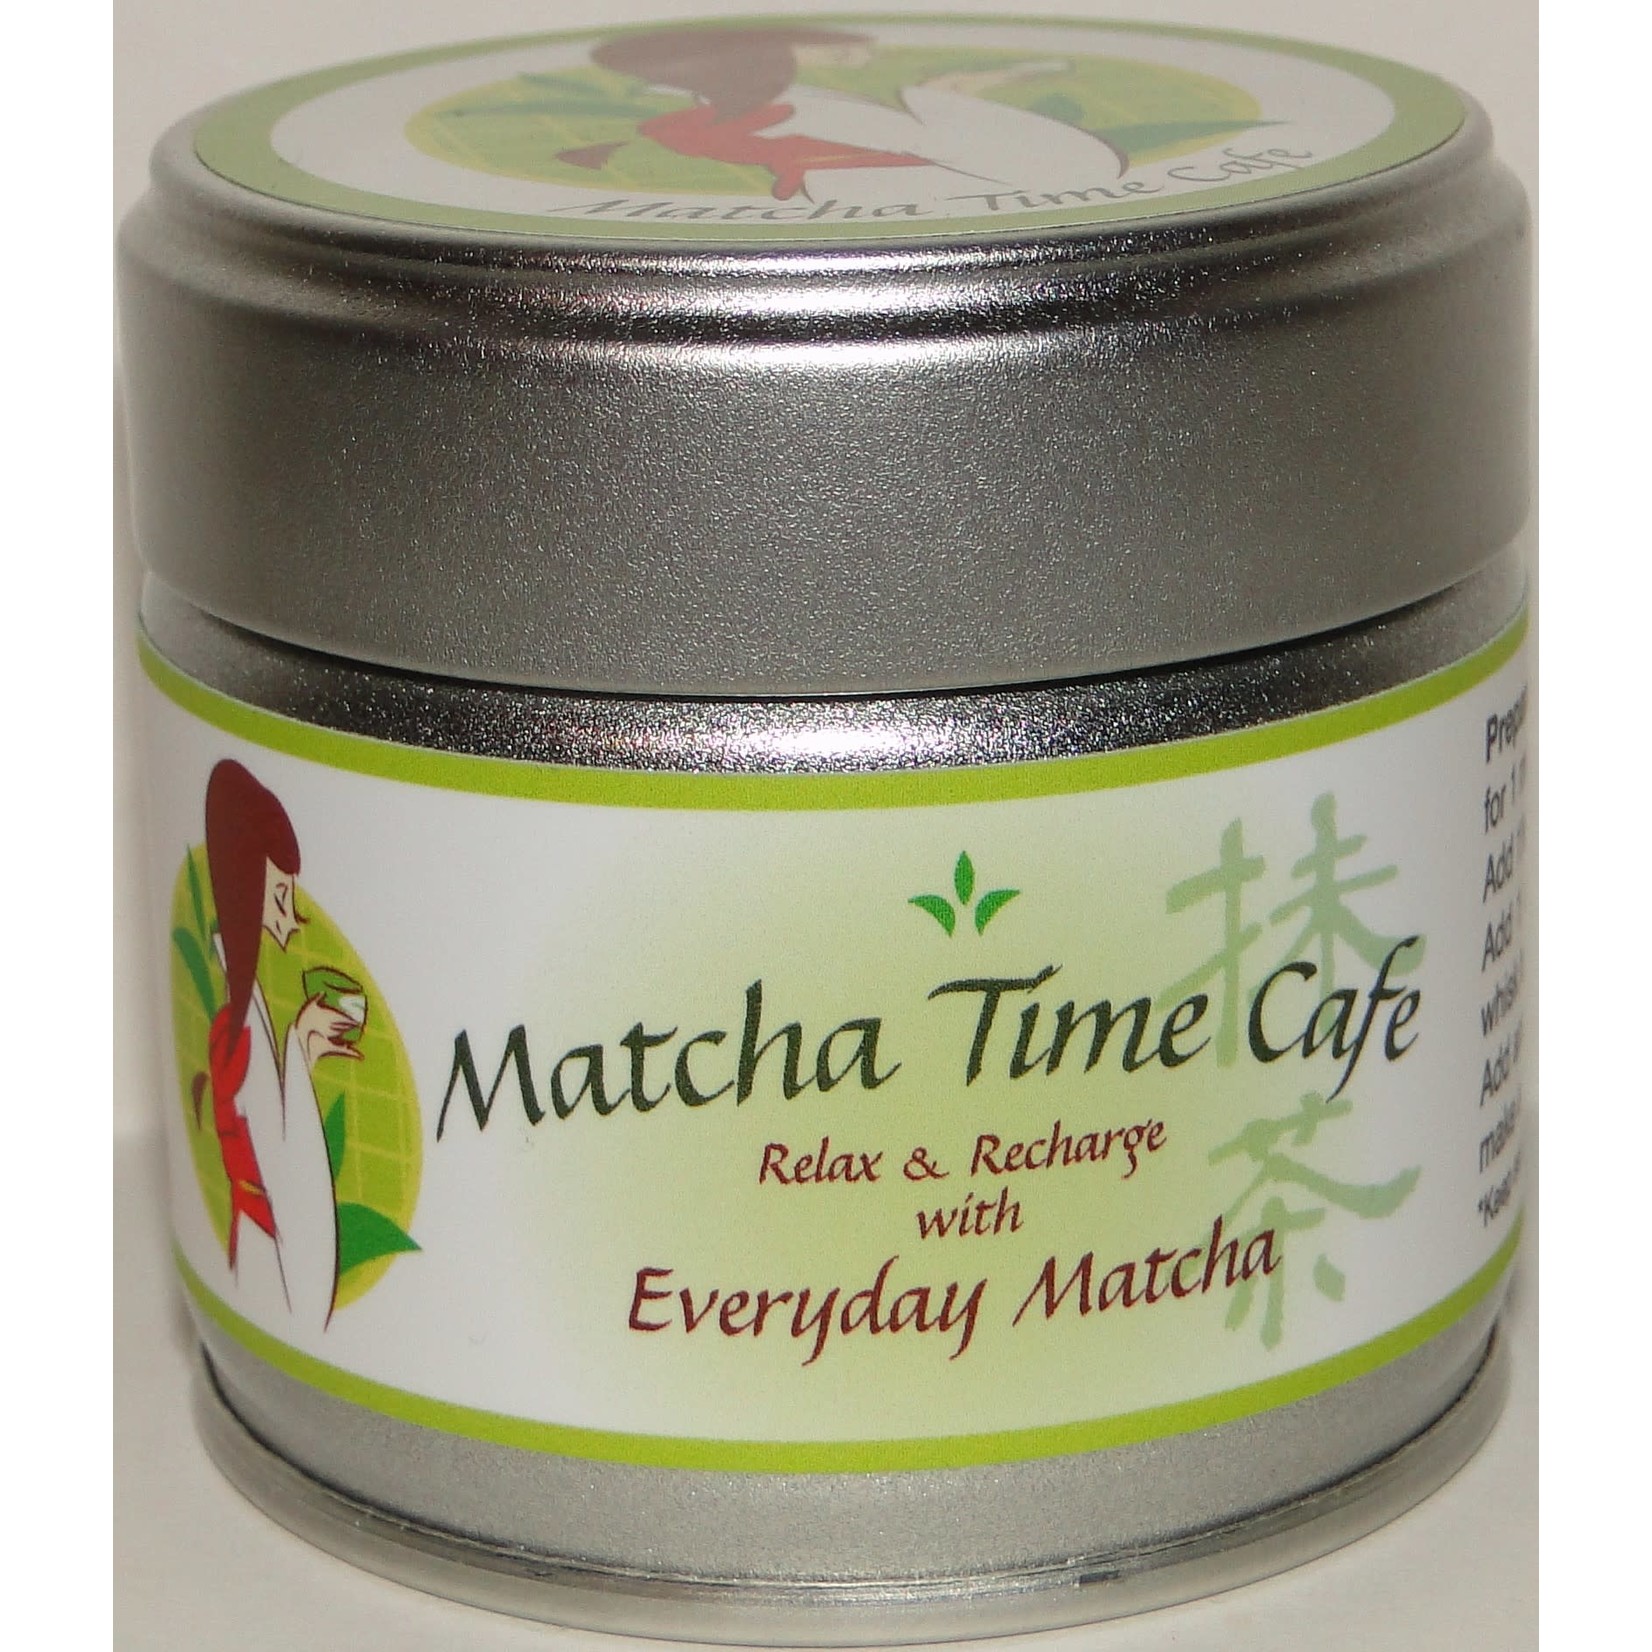 Matcha Time Cafe MTC Everyday Matcha Ceremonial Grade - 30g can